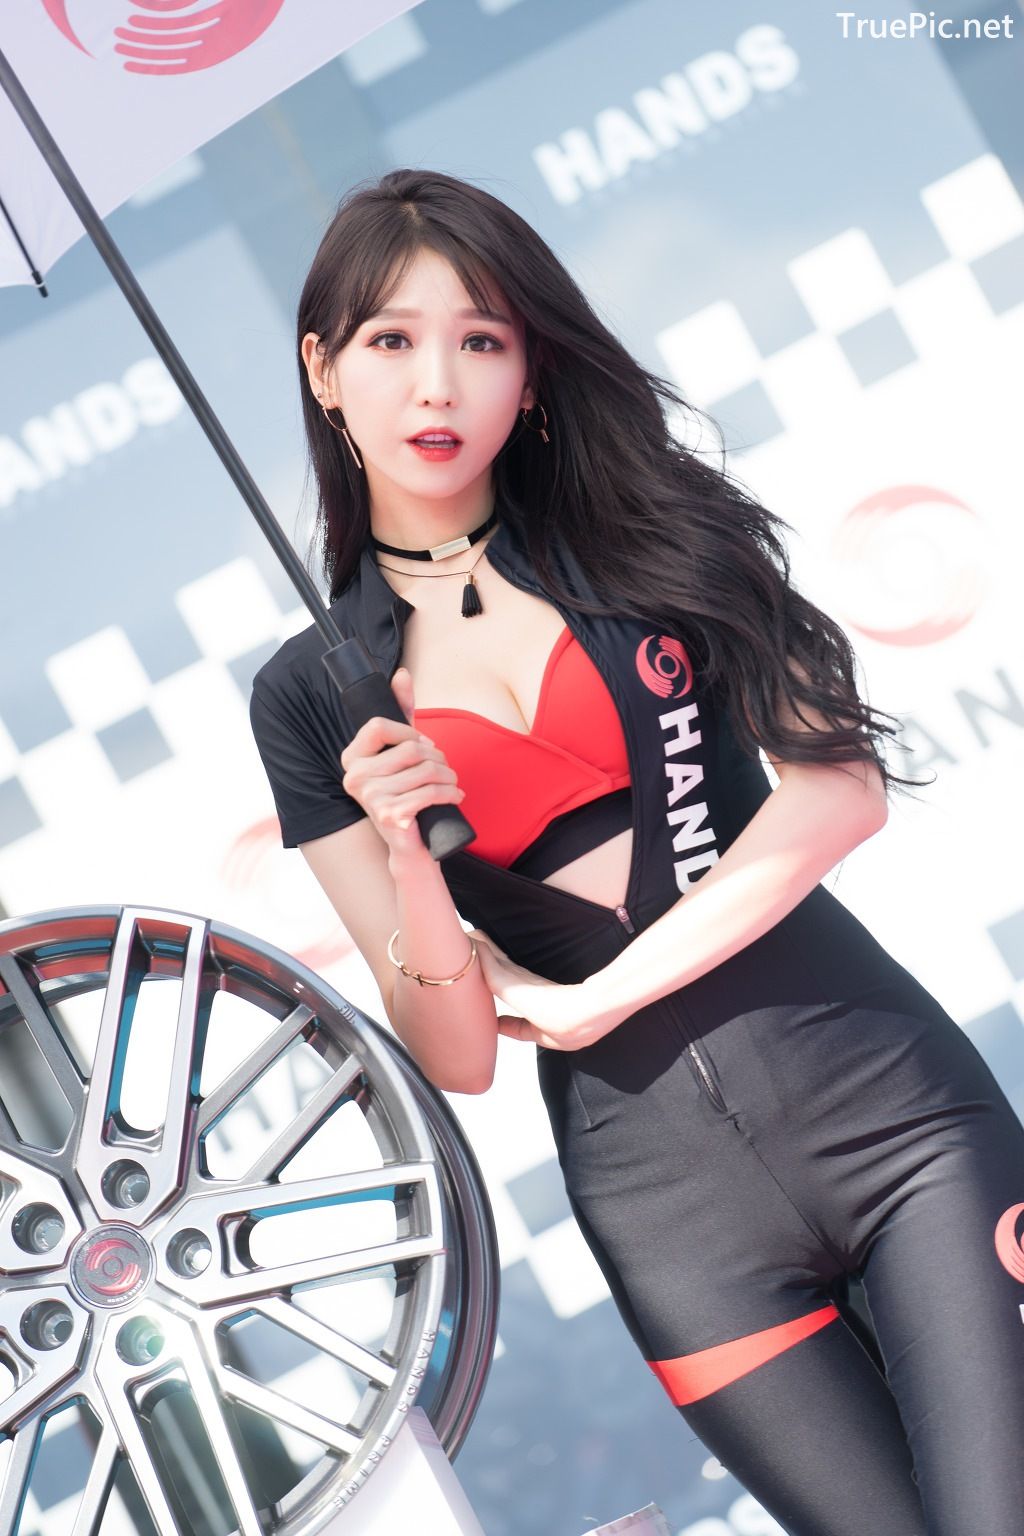 Image-Korean-Racing-Model-Lee-Eun-Hye-At-Incheon-Korea-Tuning-Festival-TruePic.net- Picture-216